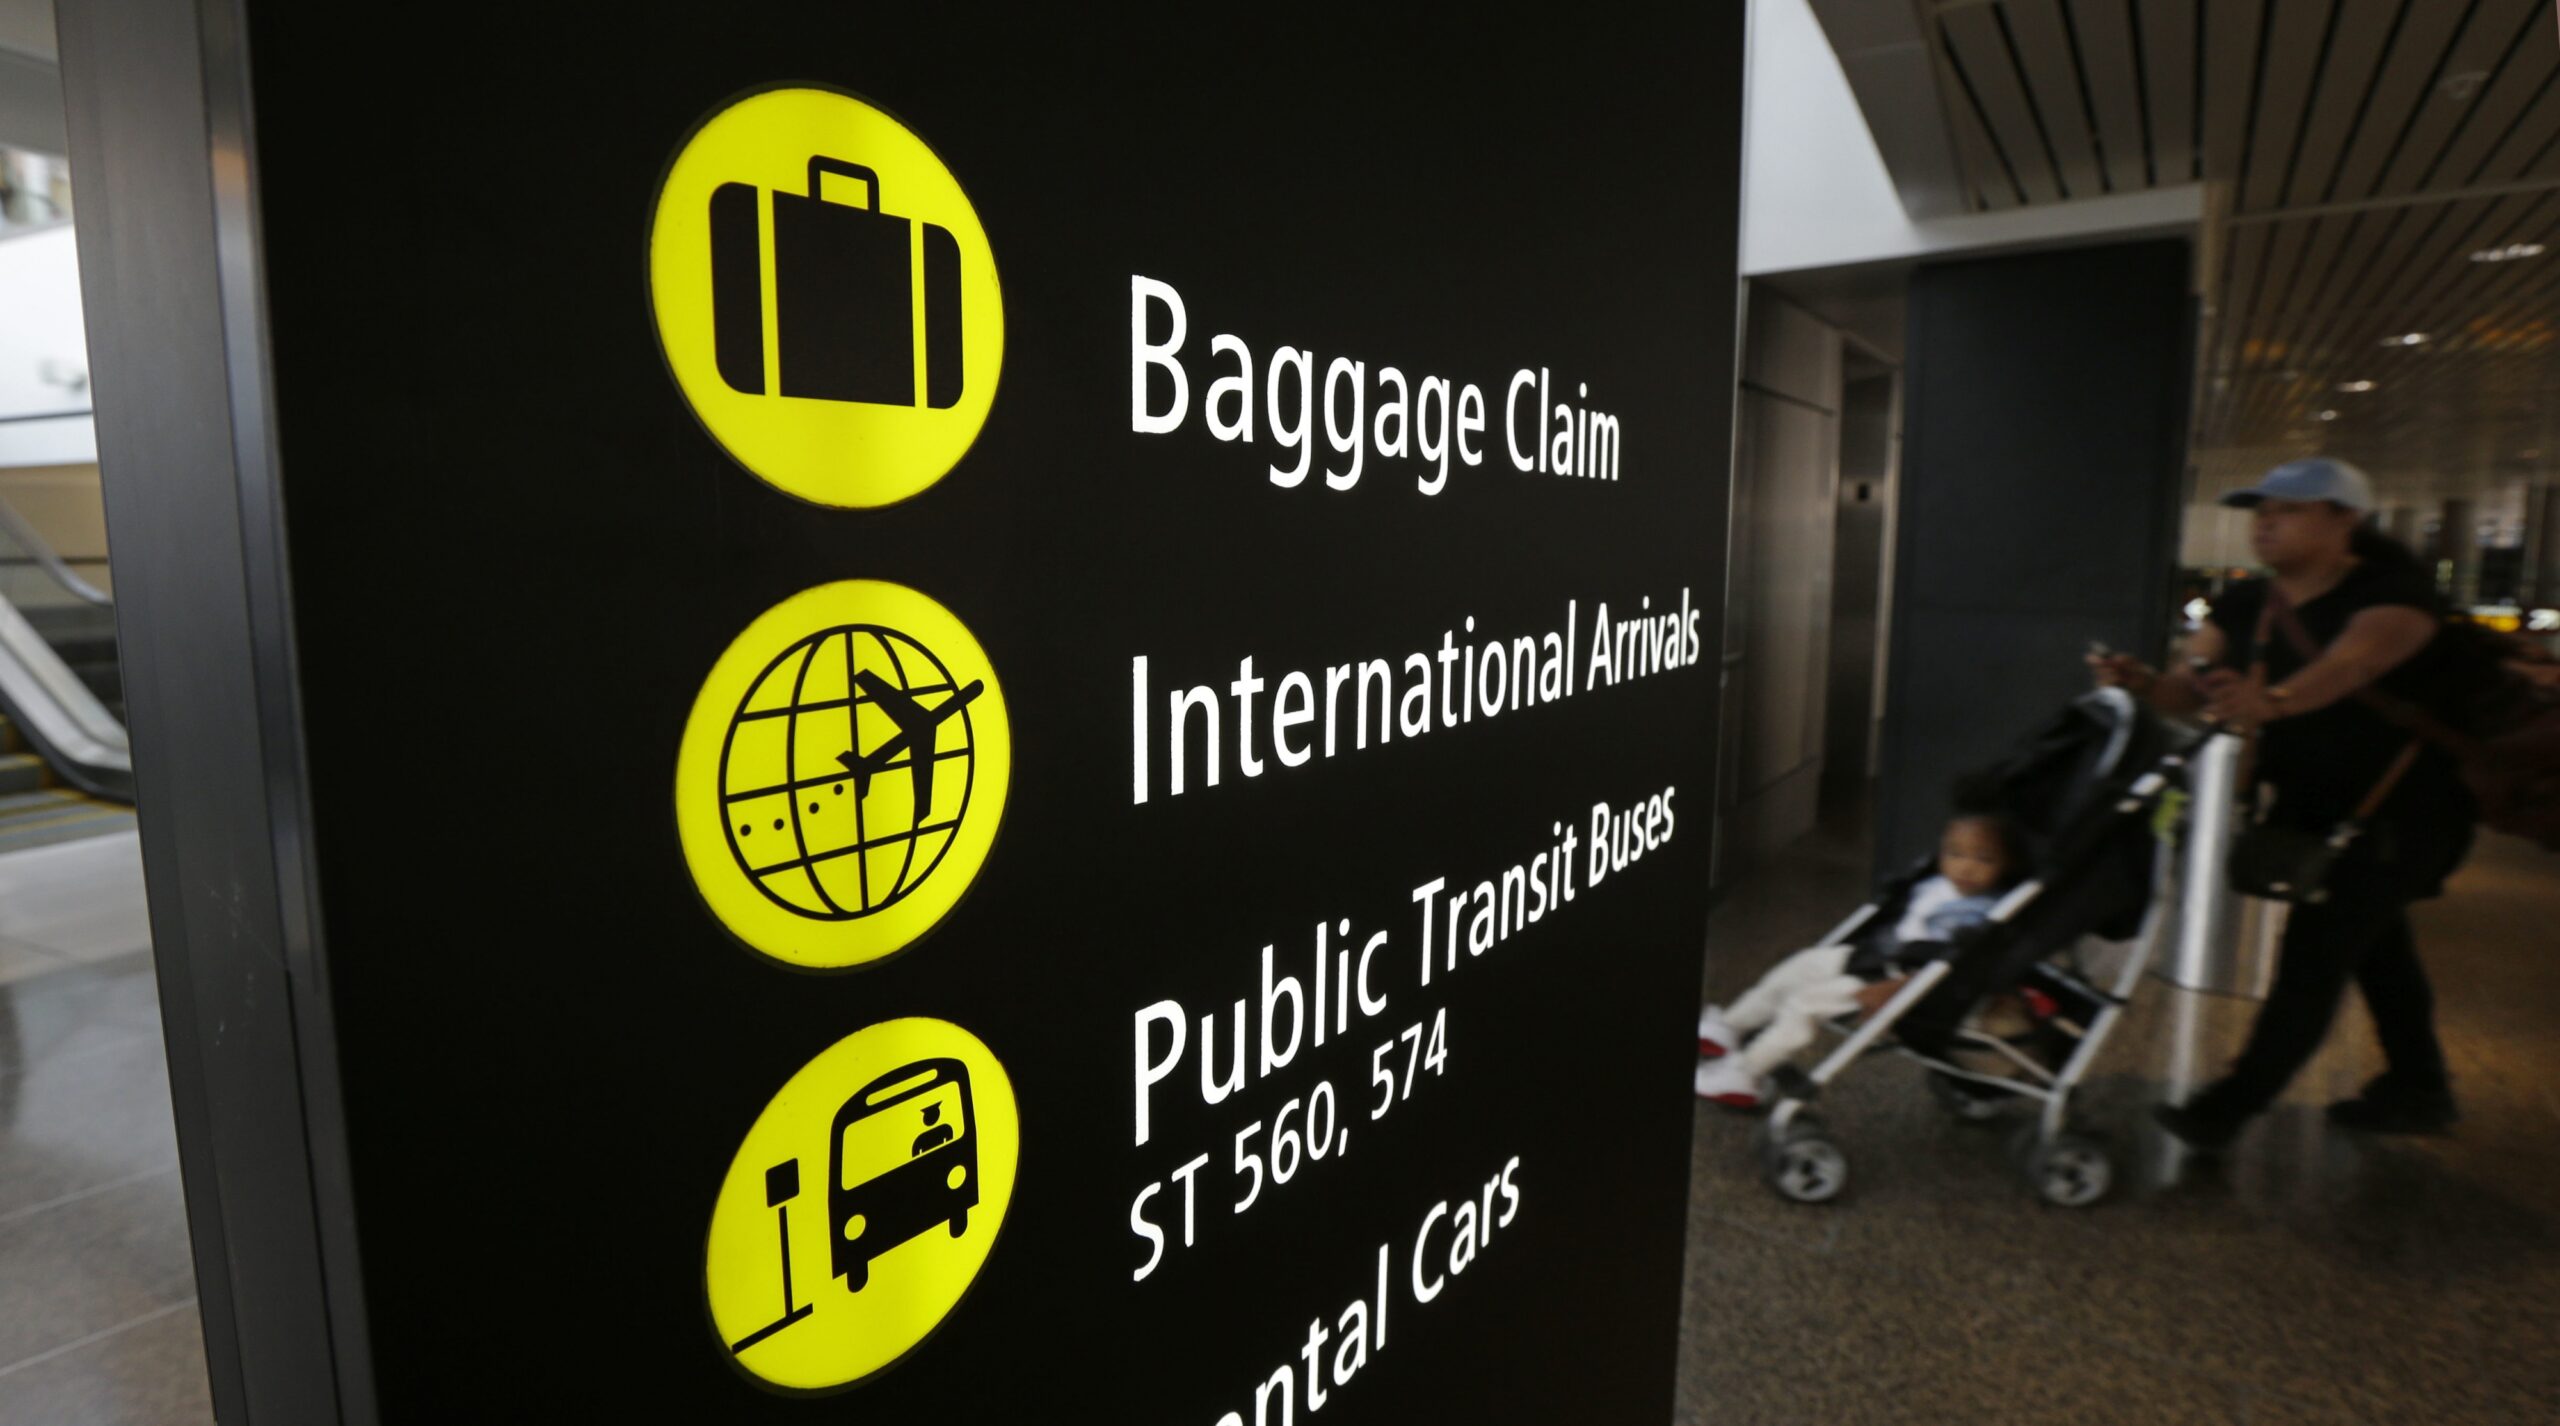 International arrivals at airport